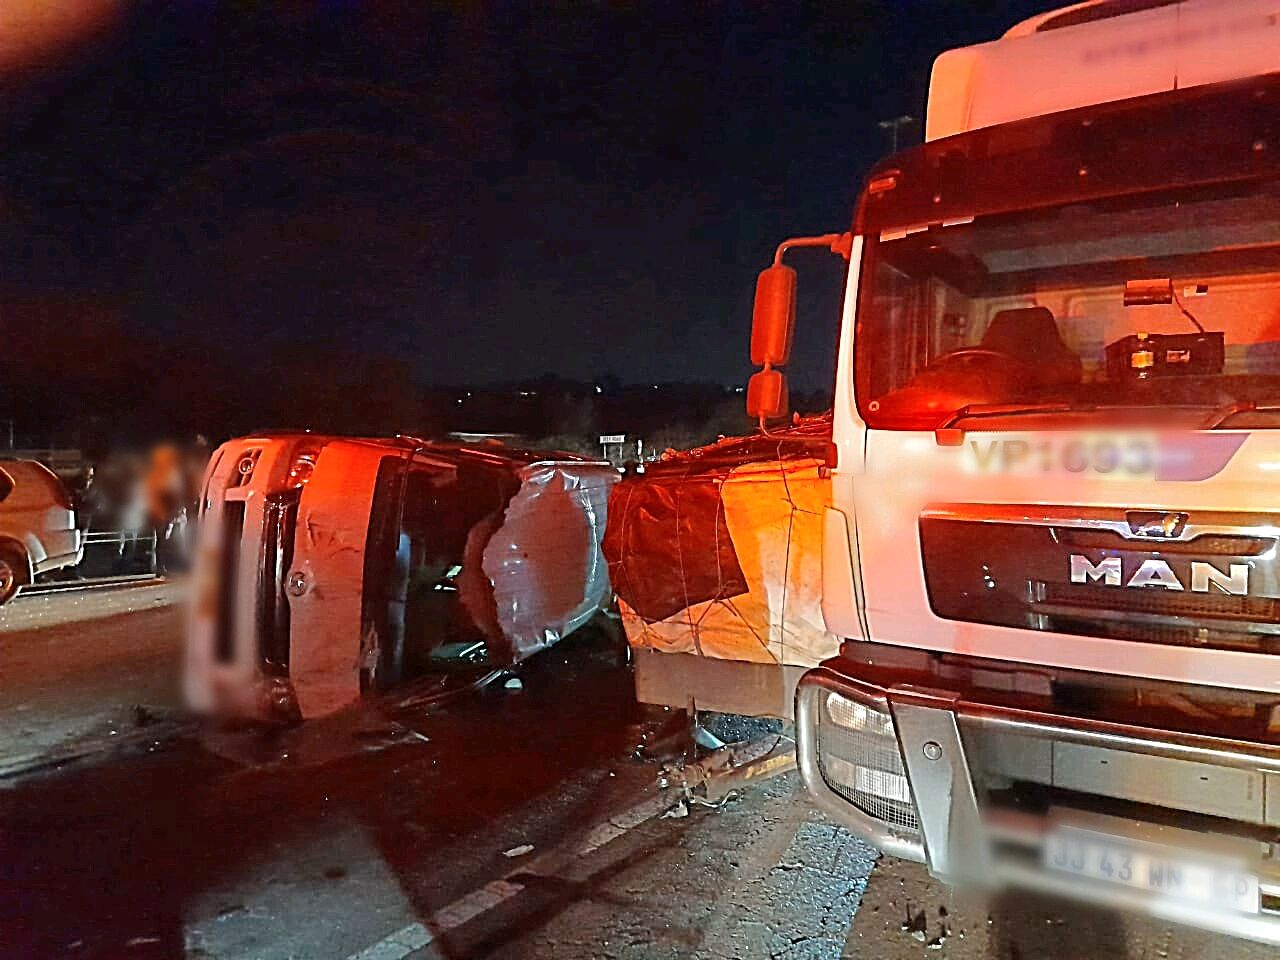 70 people injured in N1 multi-vehicle accident in Pretoria